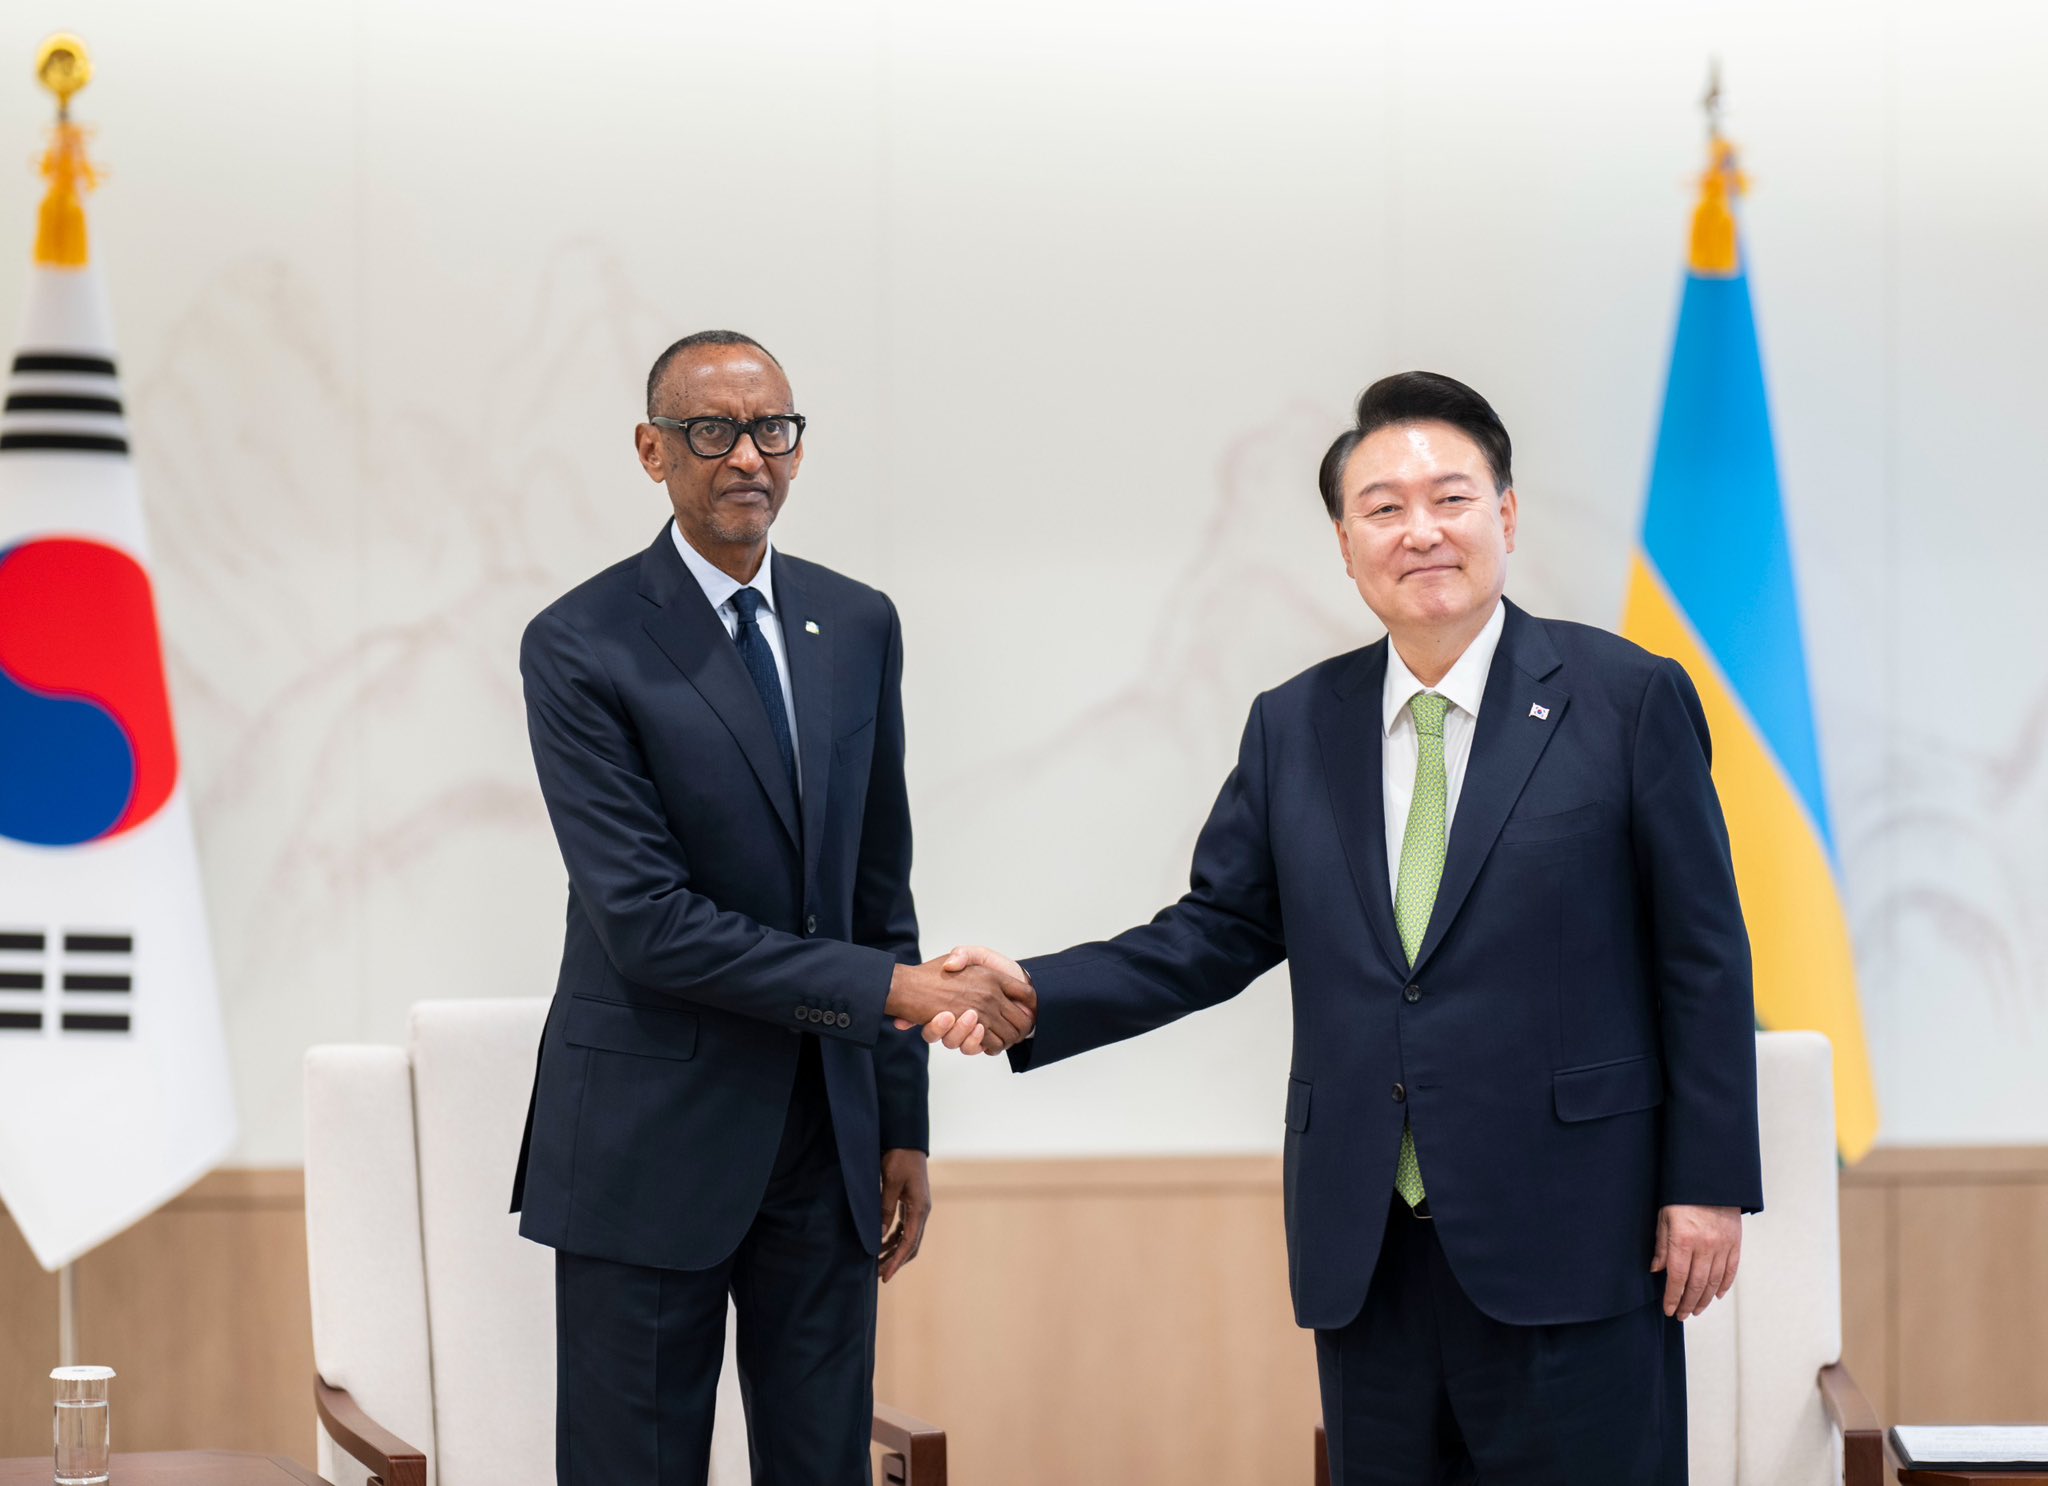 Perezida Kagame yakiriwe na mugenzi we Yoon Suk Yeol wa Koreya y